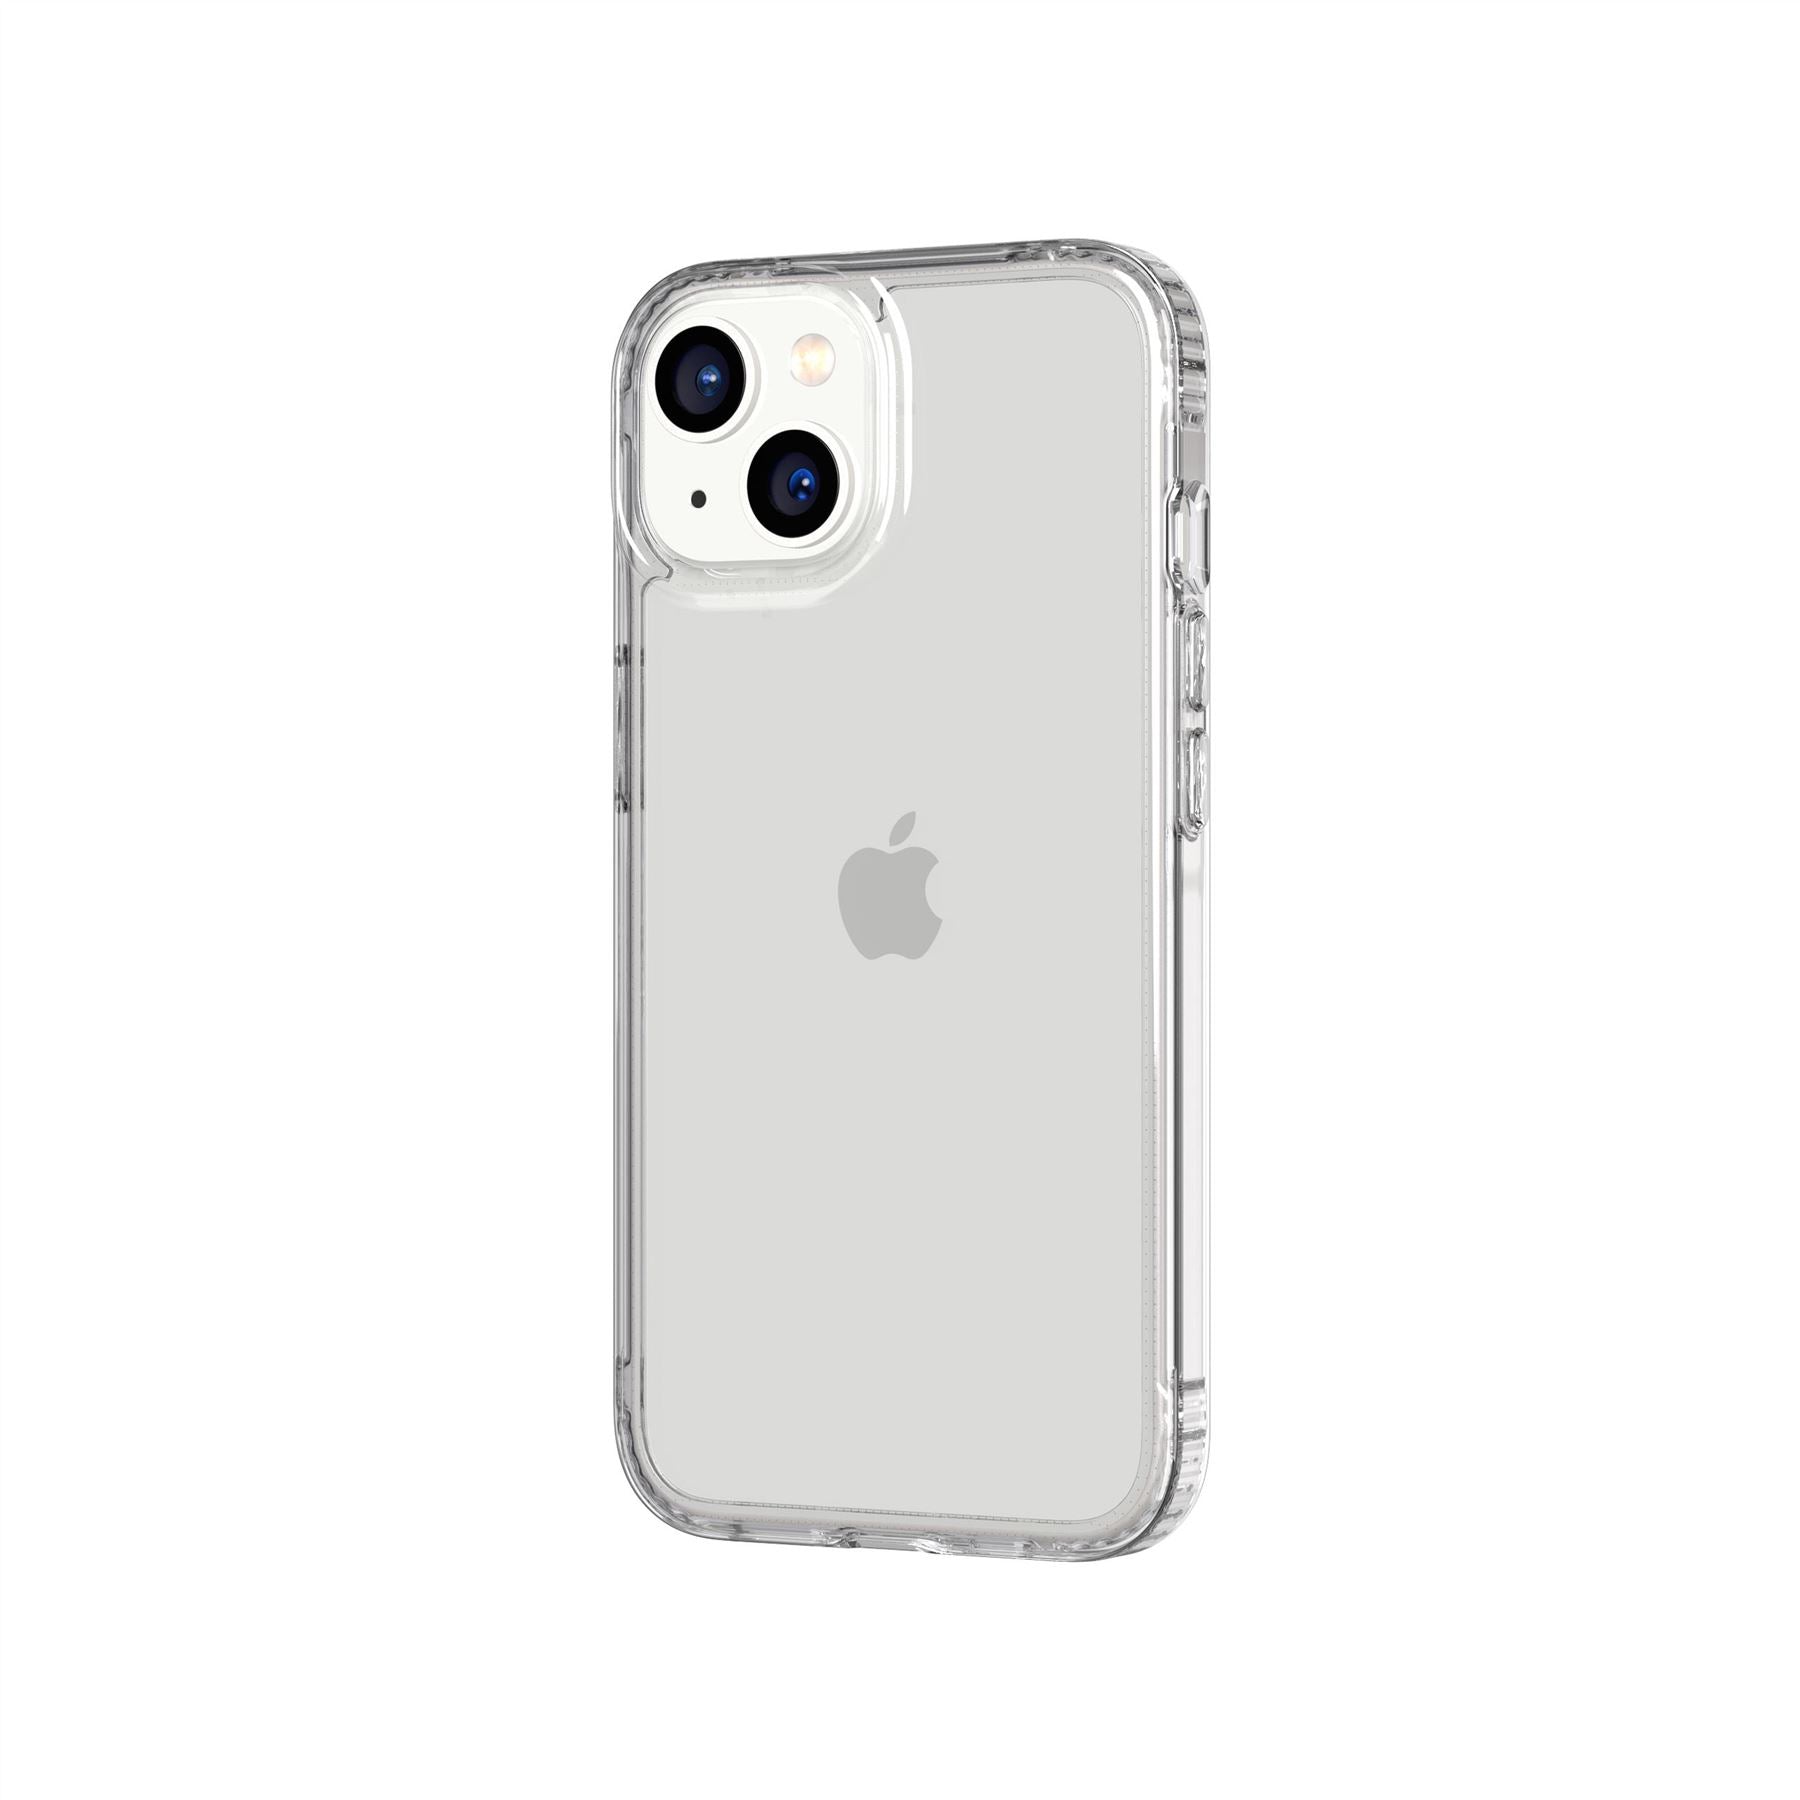 Clear & white phone case